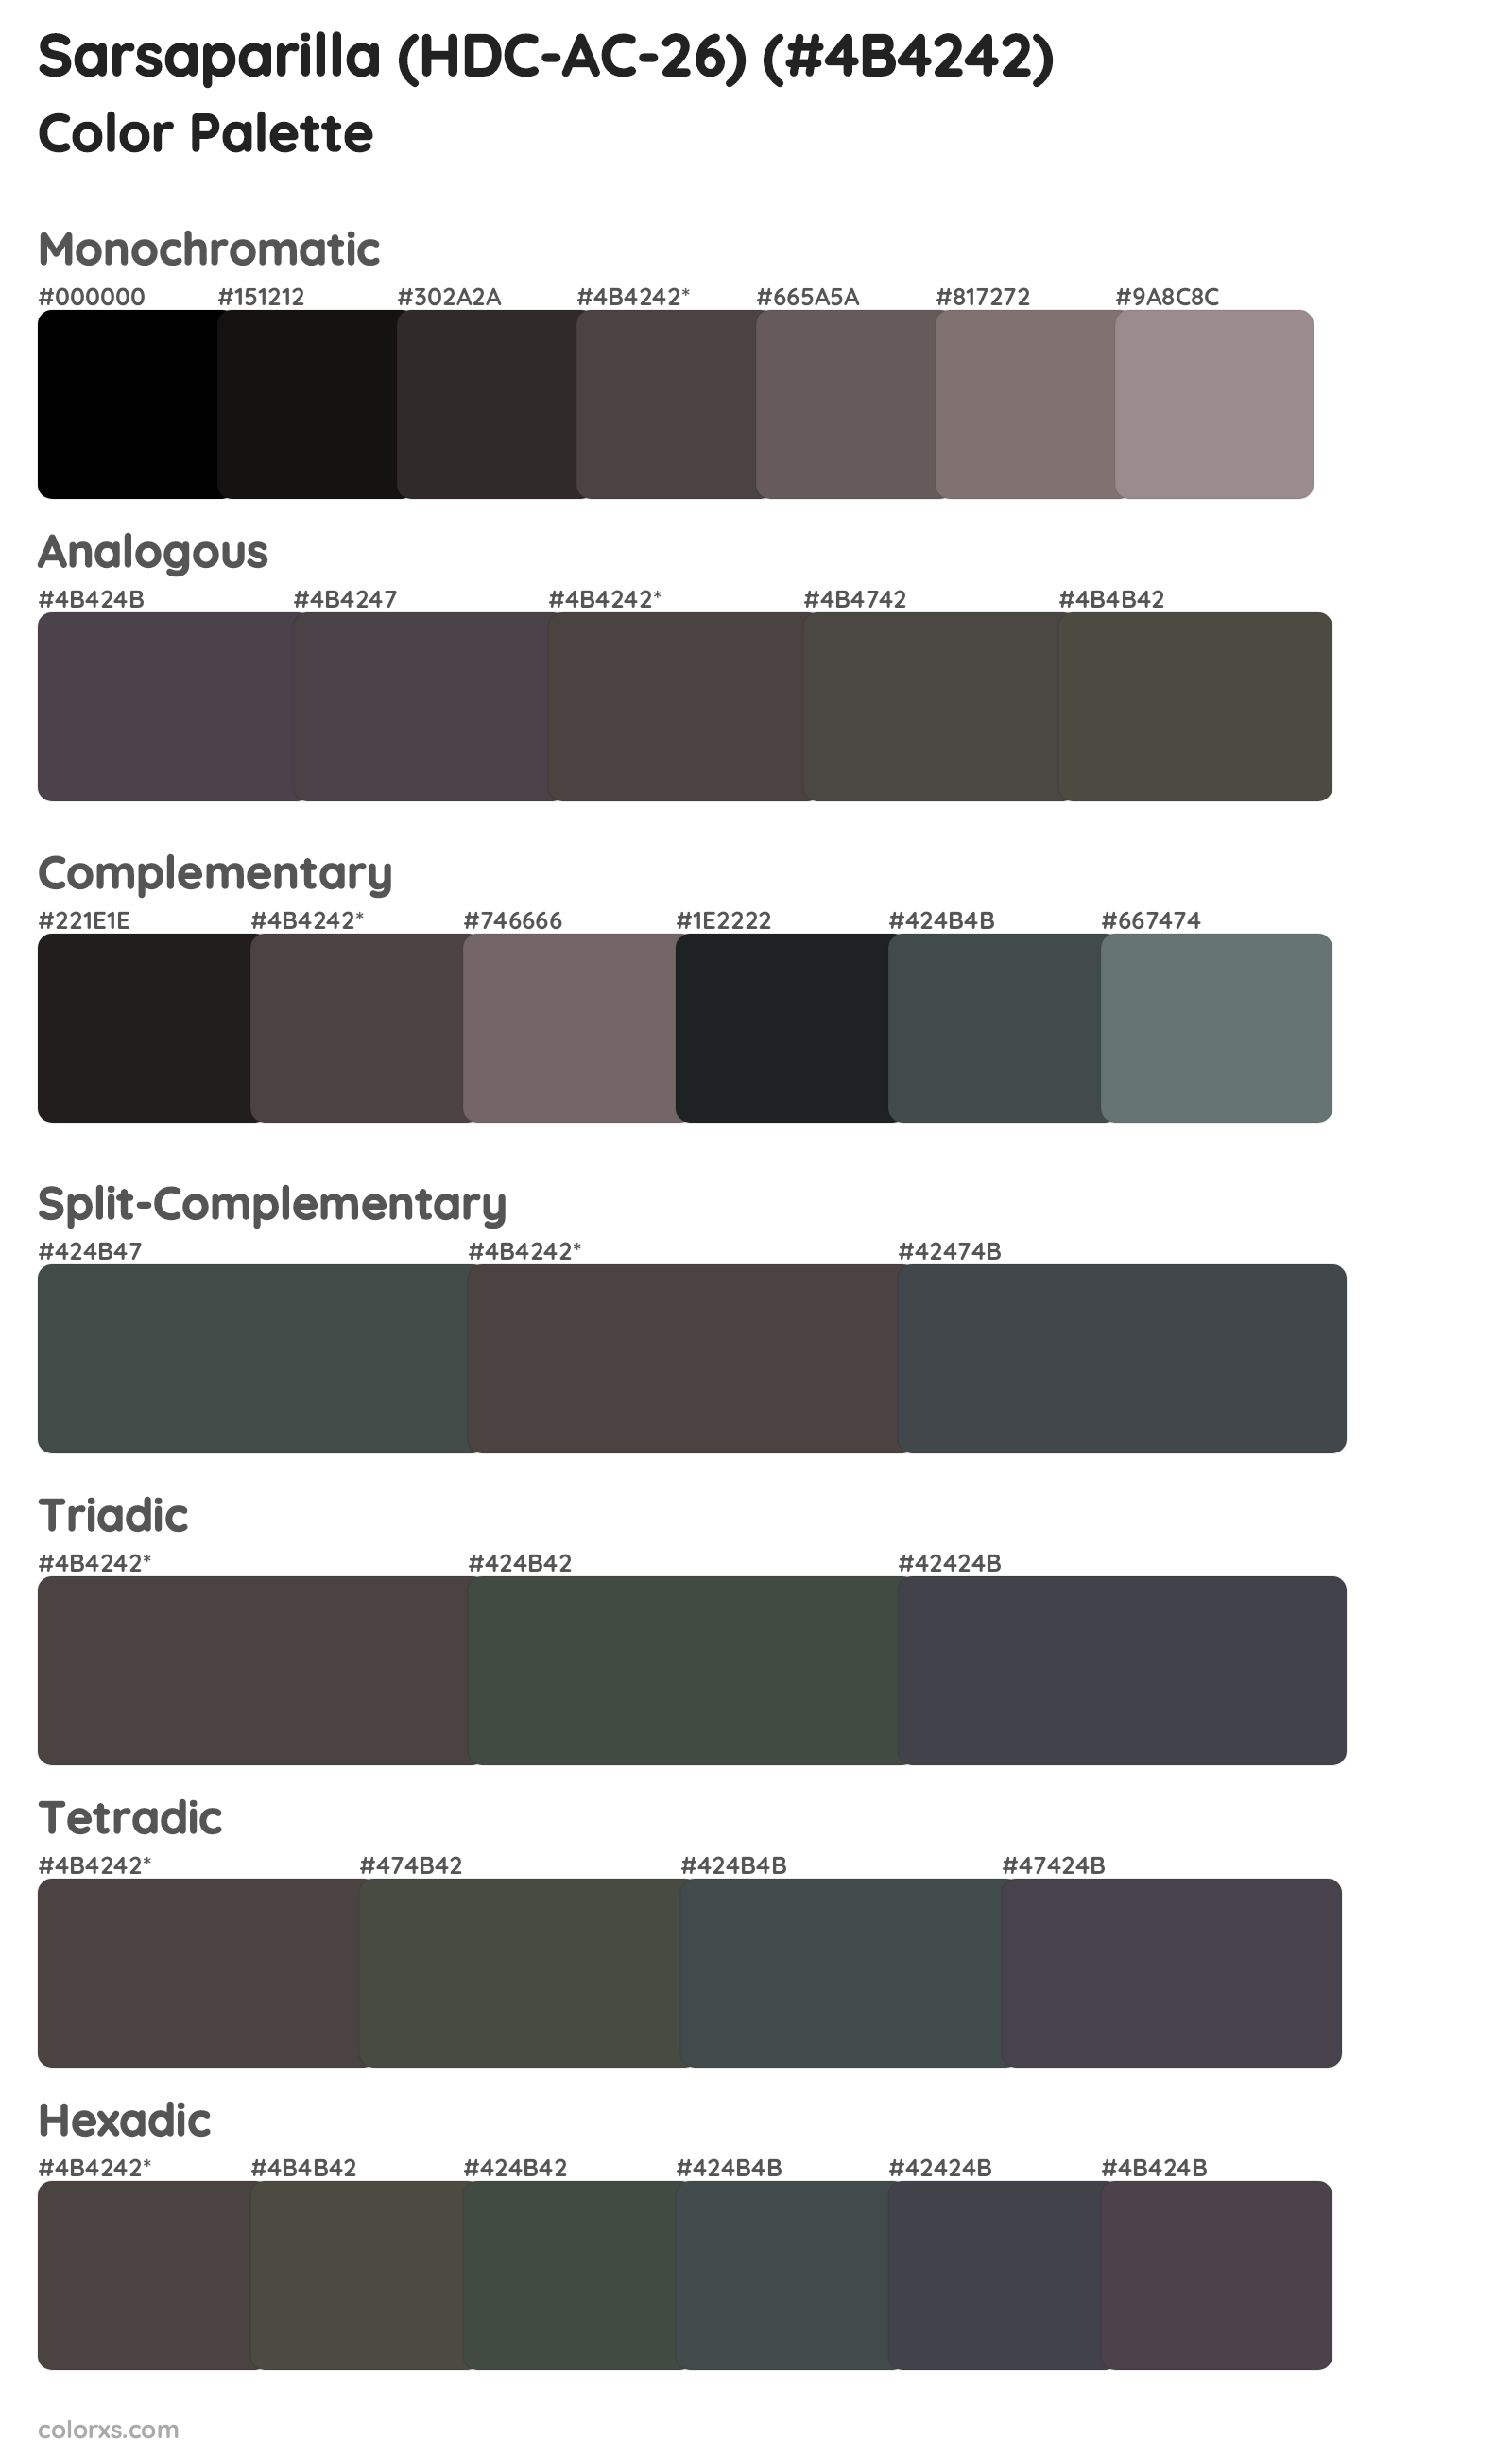 Sarsaparilla (HDC-AC-26) Color Scheme Palettes